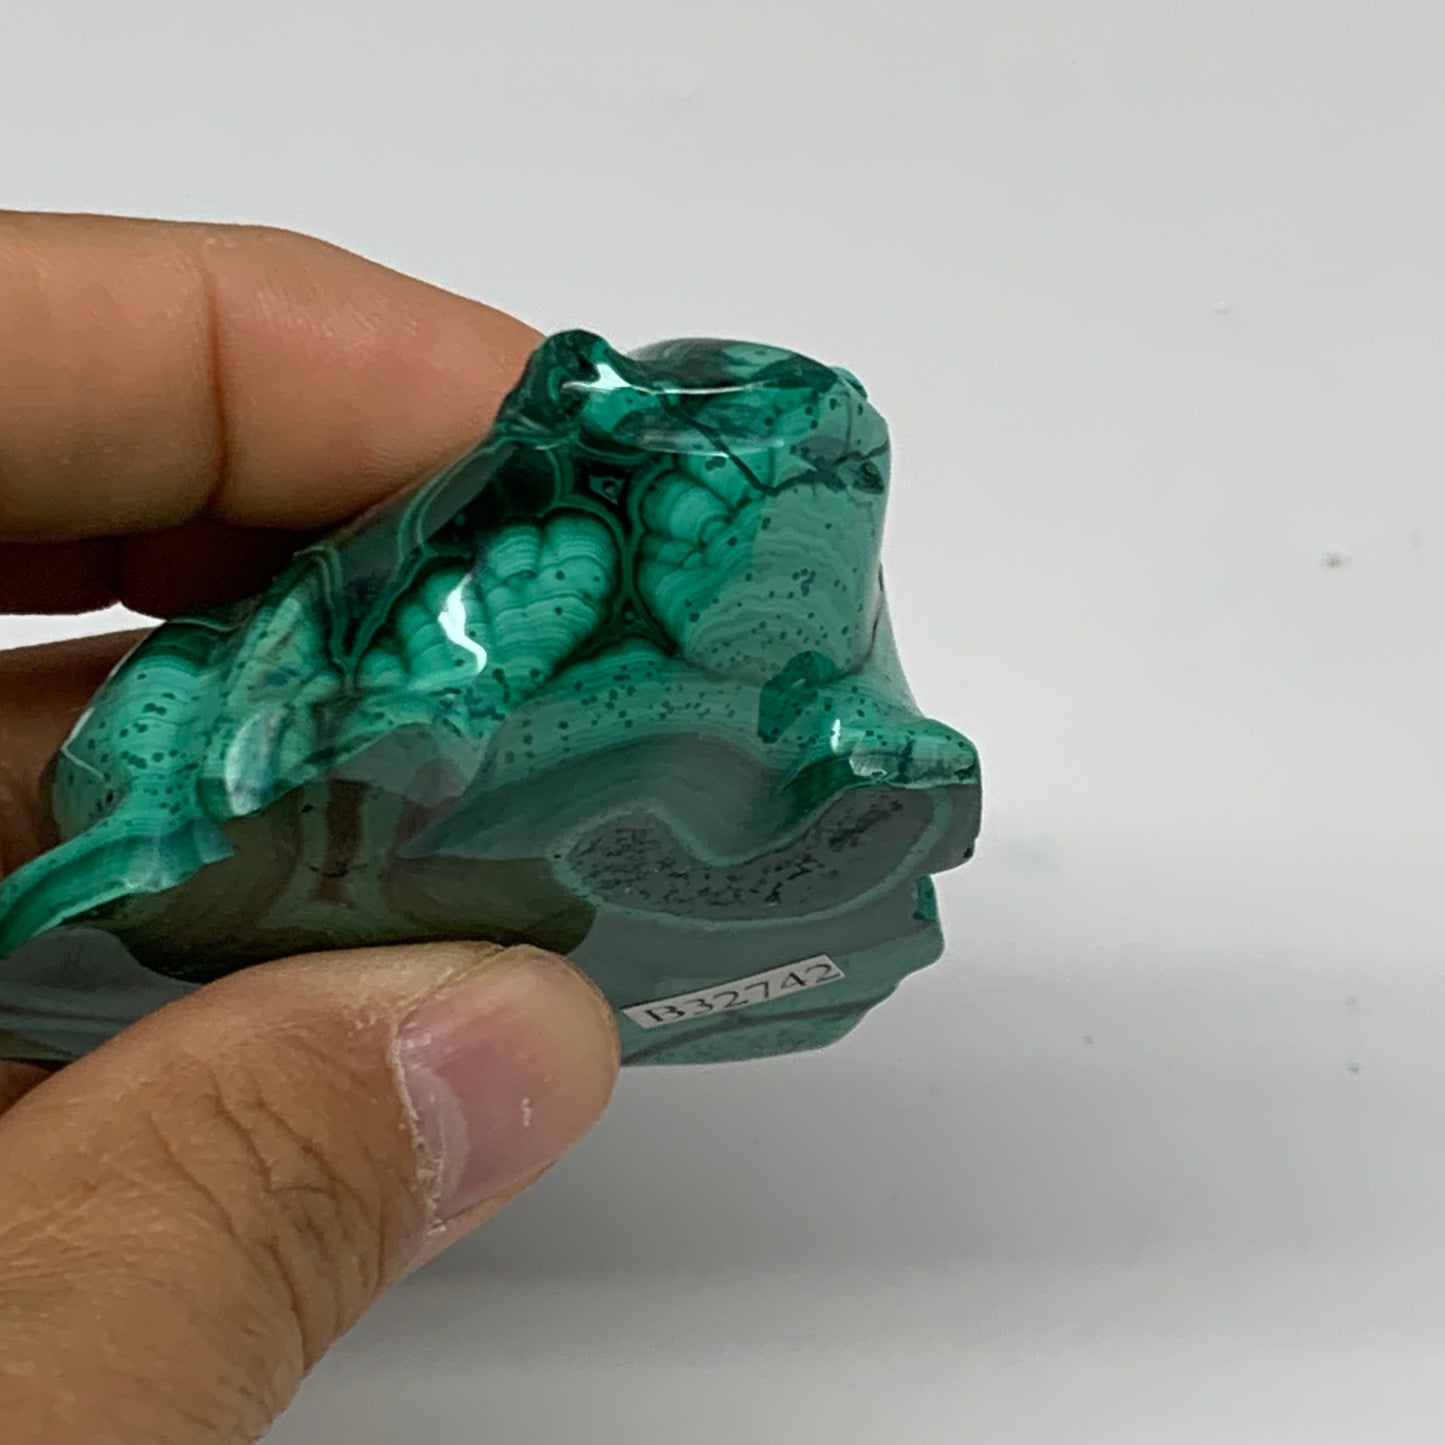 154g, 2.6"x2.3"x1" Natural Solid Malachite Frog Figurine @Congo, B32742